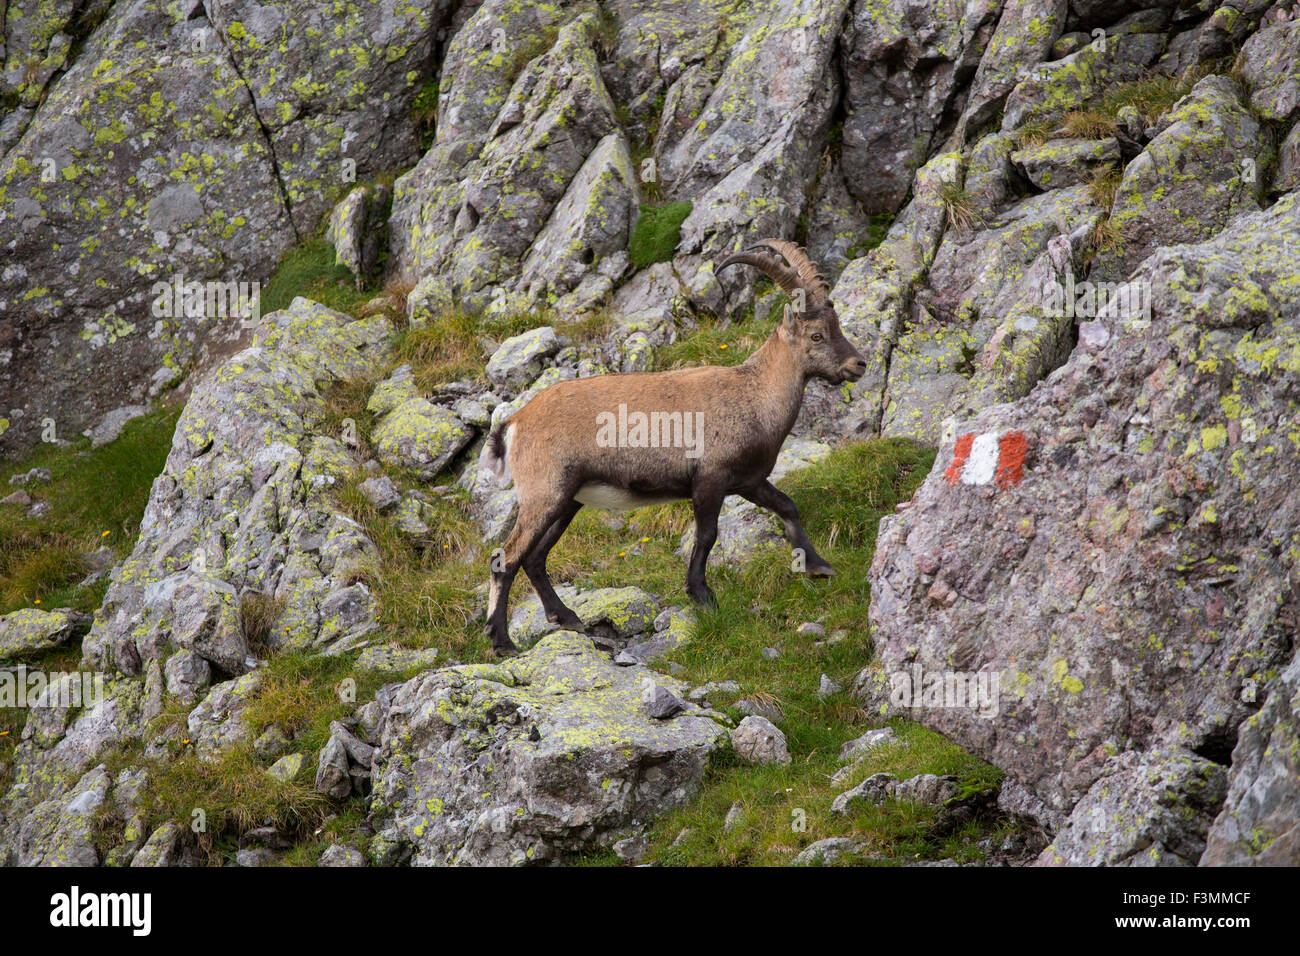 An encounter with a mountain goat (ibex) on a trail near the Rifugo Bernini. Hiking the Sentiero delle Orobie in the Italian Alps. Stock Photo